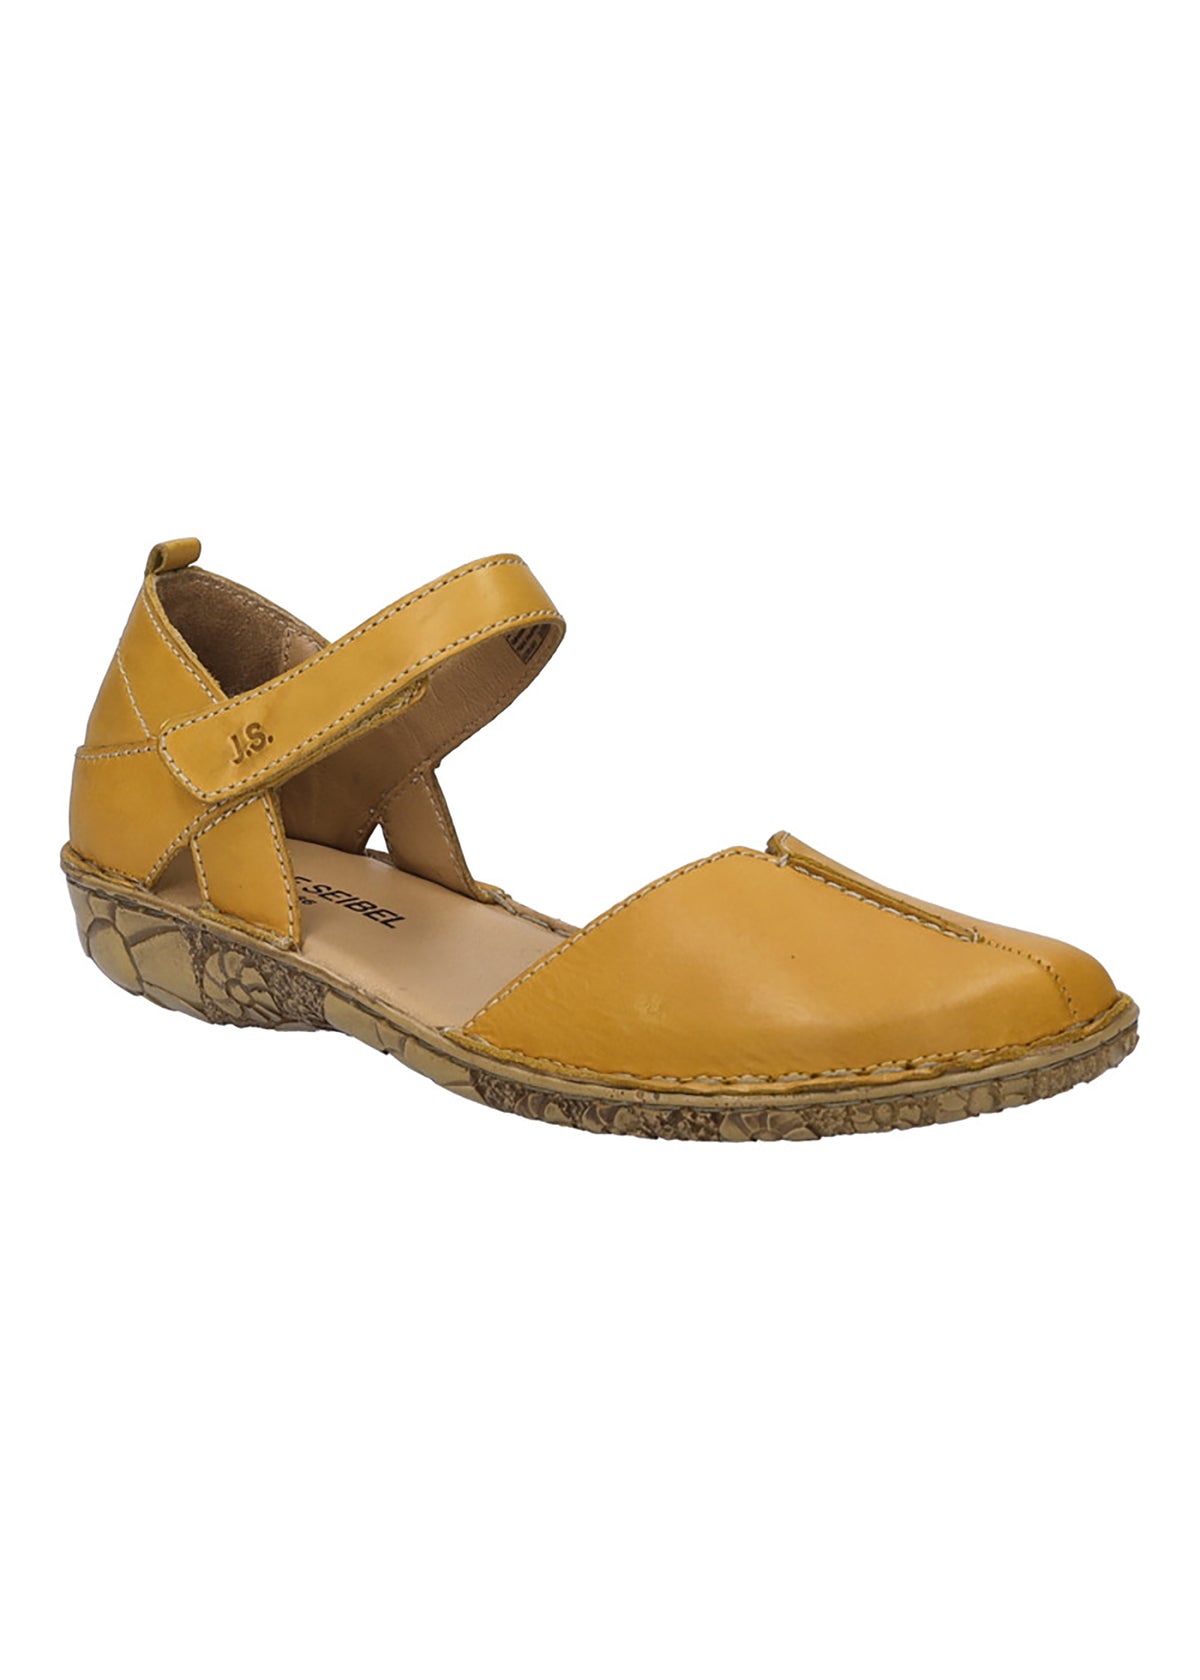 Sandaler med stängd tå - gult läder, Rosalie 42